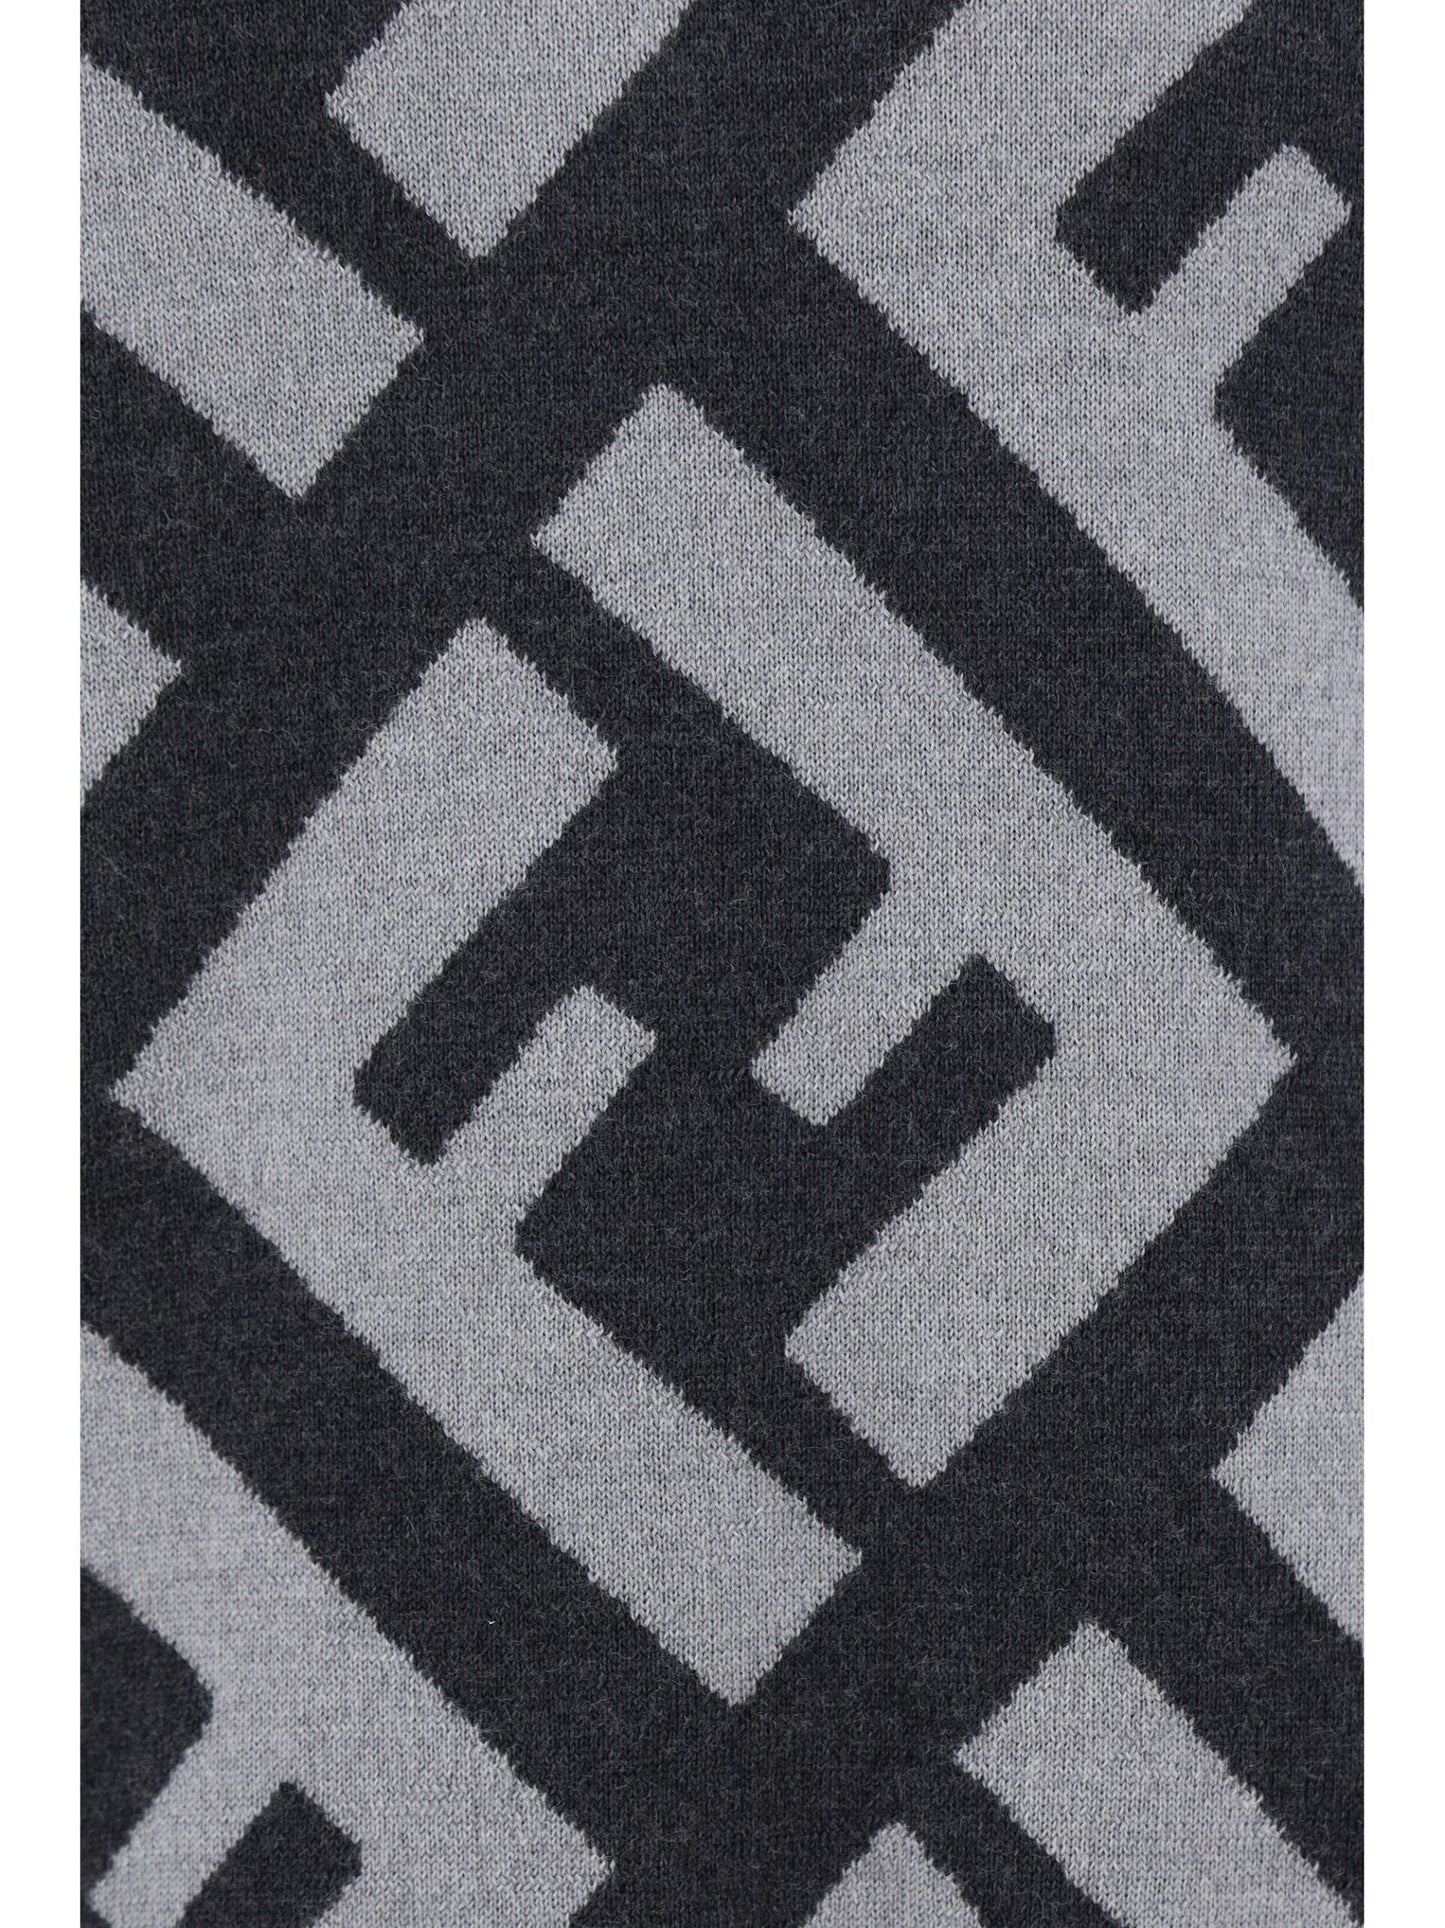 Fendi Men's Grey Wool Logo Details Crewneck Sweater